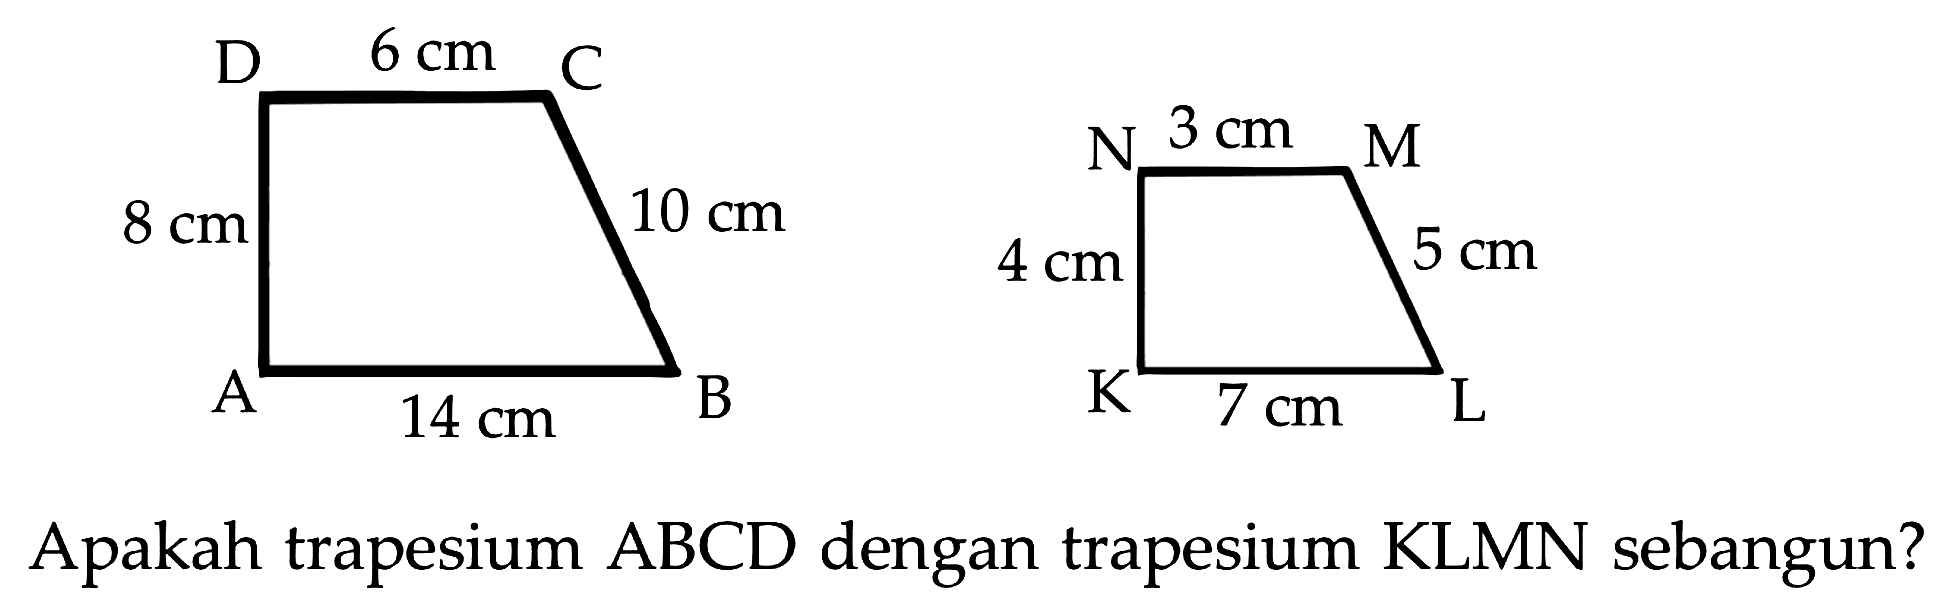 ABCD 6 cm 8 cm 10 cm 14 cm KLMN 3 cm 4 cm 5 cm 7 cm Apakah trapesium ABCD dengan trapesium KLMN sebangun?